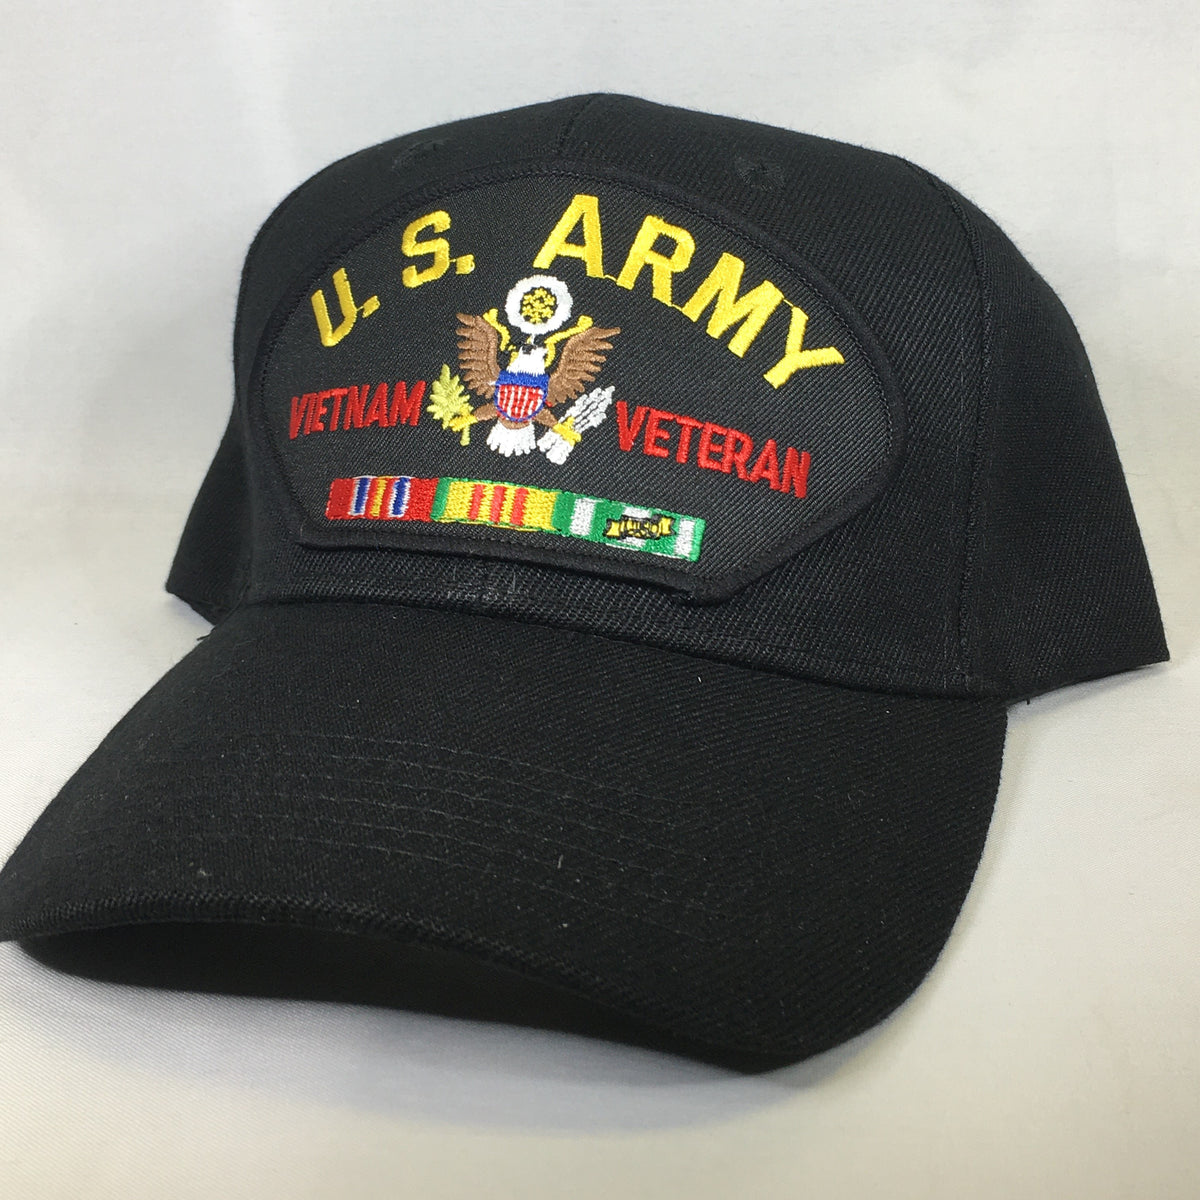 U.S. Army Vietnam Veteran Cap